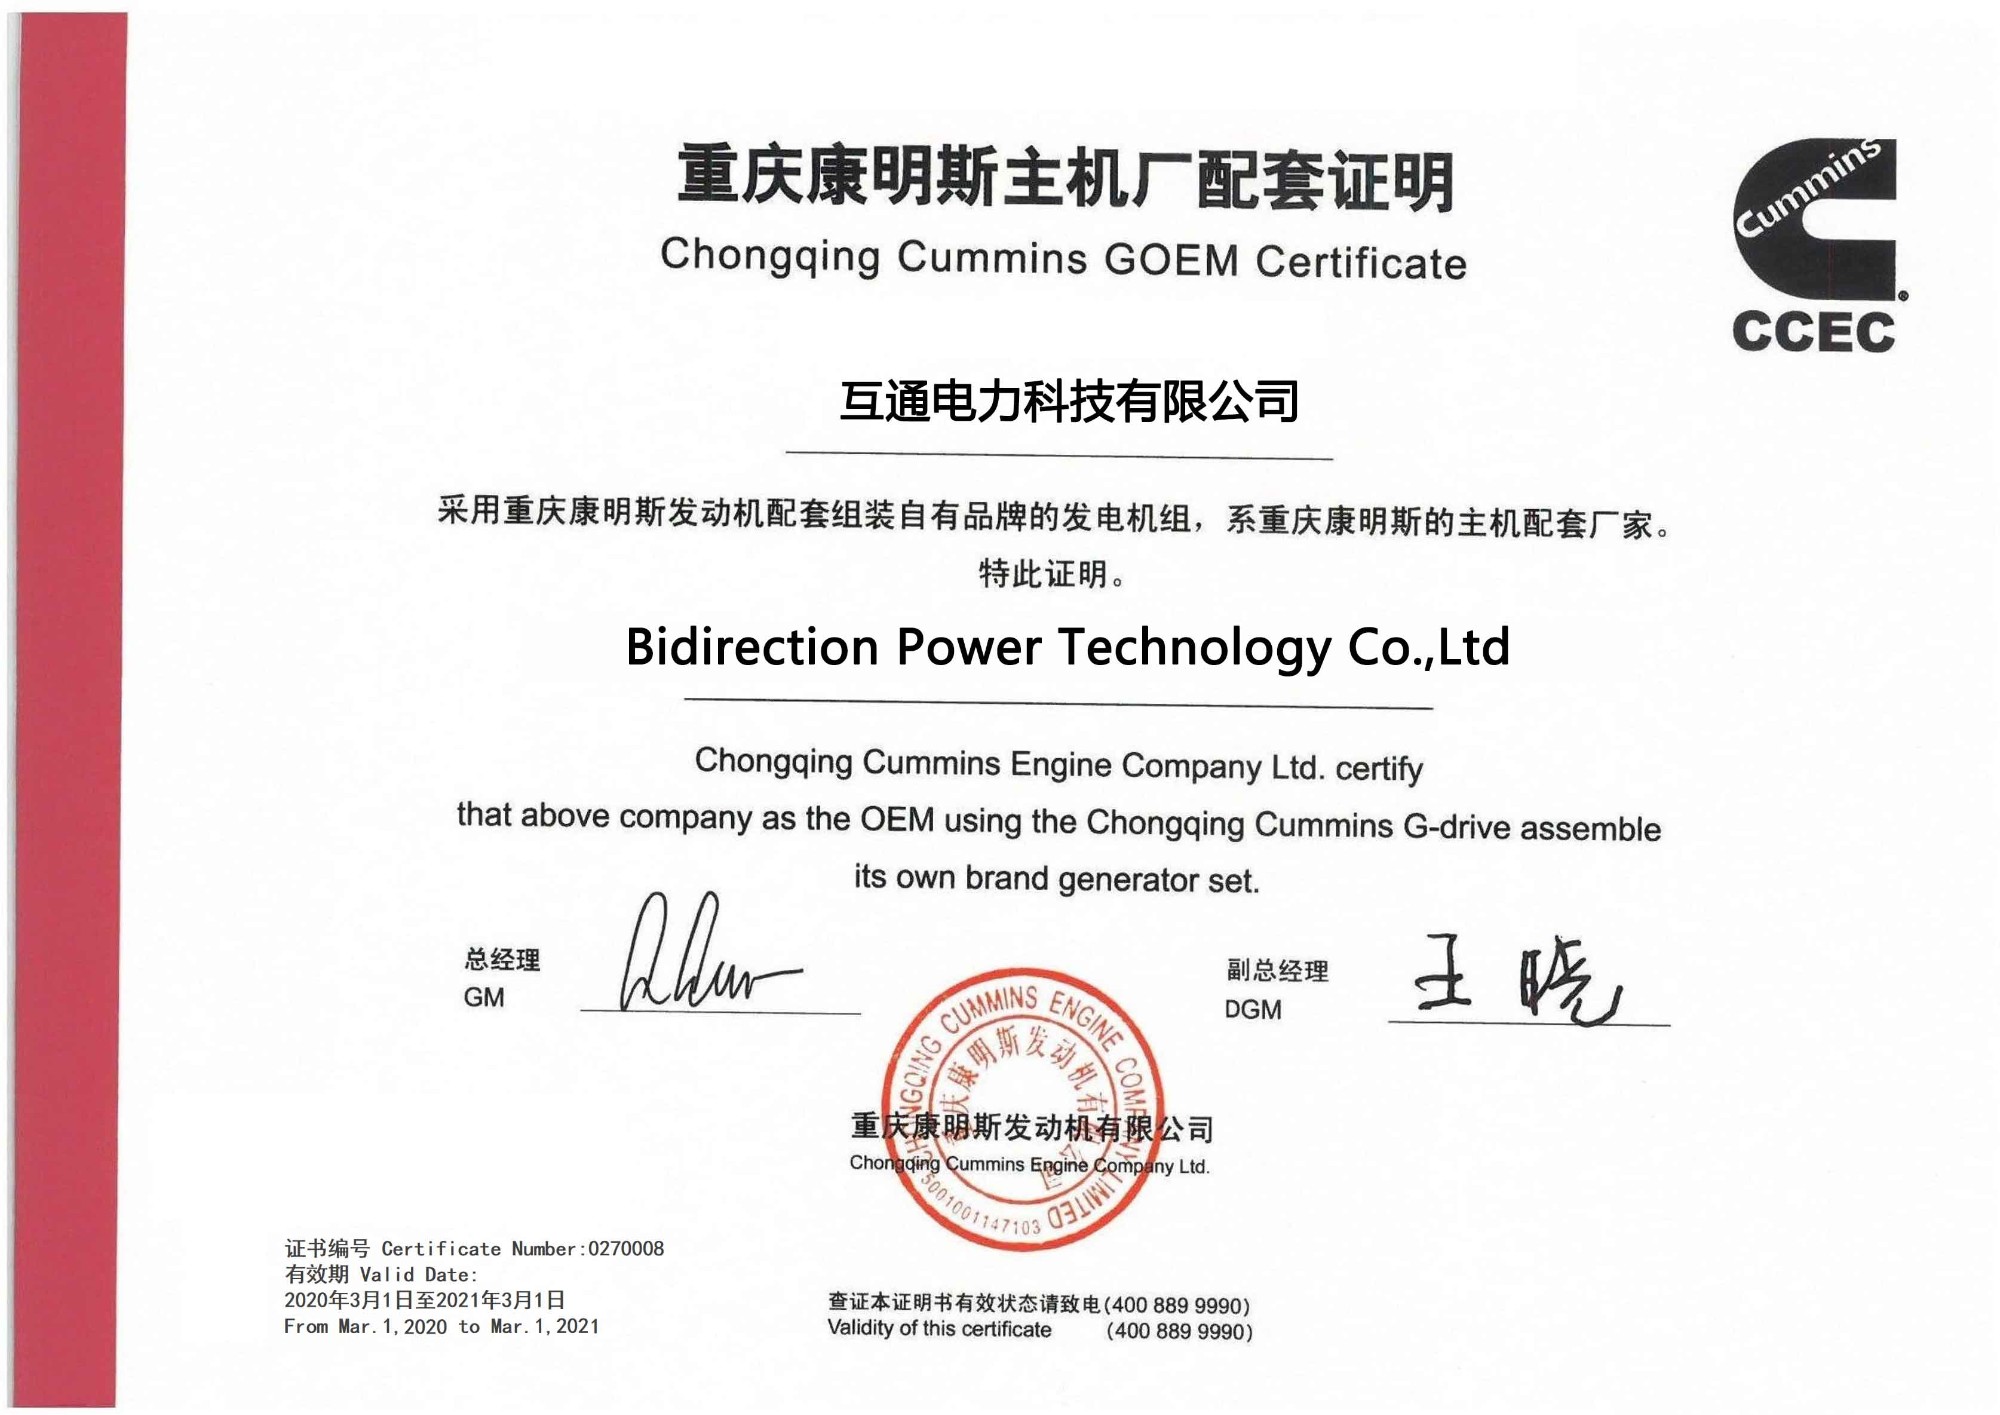 Bidirection Power Technology Co., Ltd Auktoriserad av Chongqing Cummins GOEM-certifikat